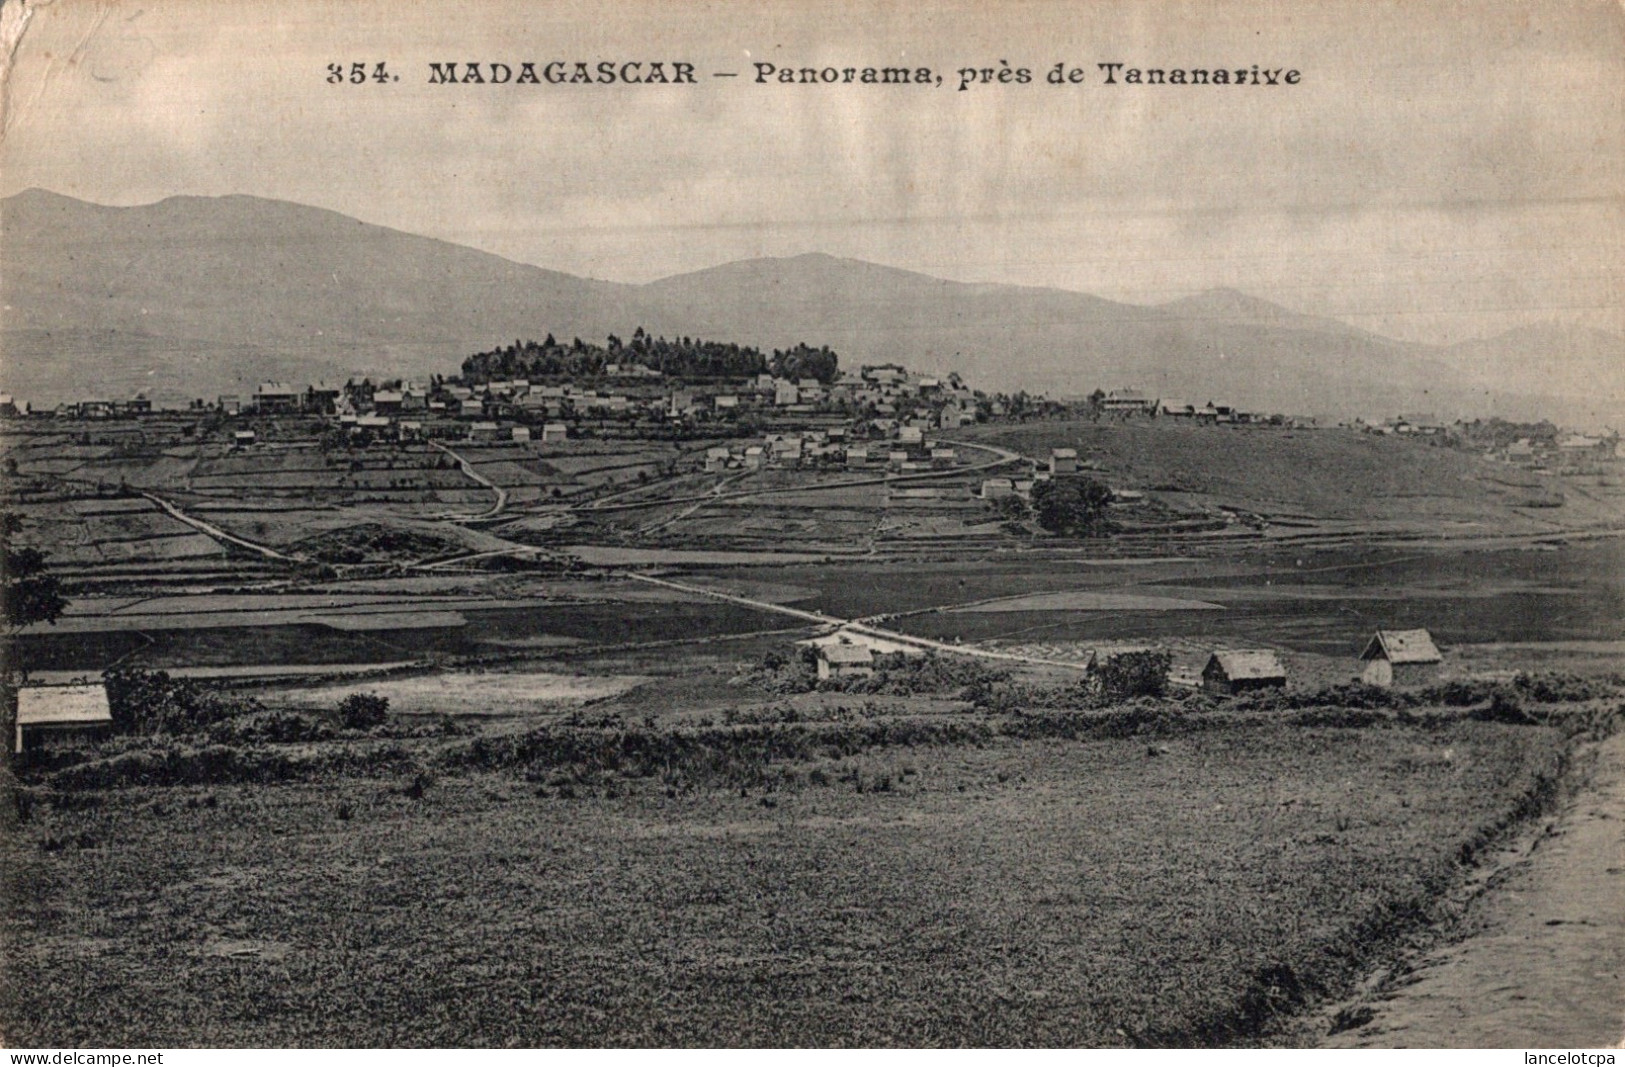 MADAGASCAR / PANORAMA PRES DE TANANARIVE - Madagaskar